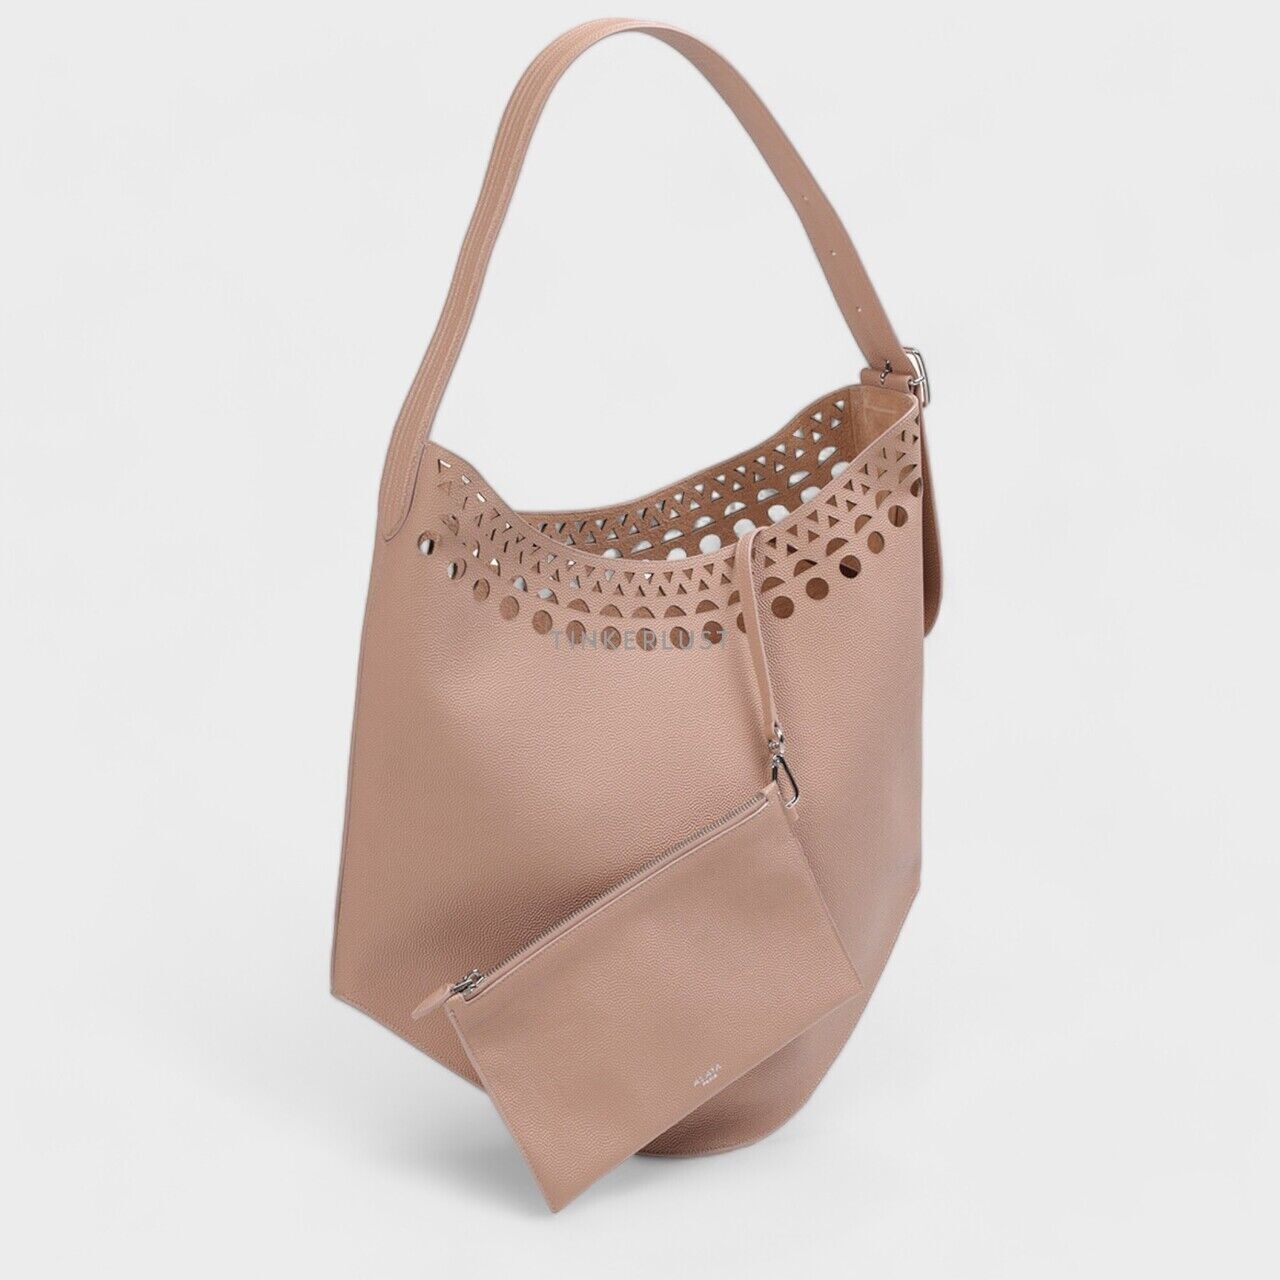 Alaia Le Gail Large Sand Leather Shoulder Bag